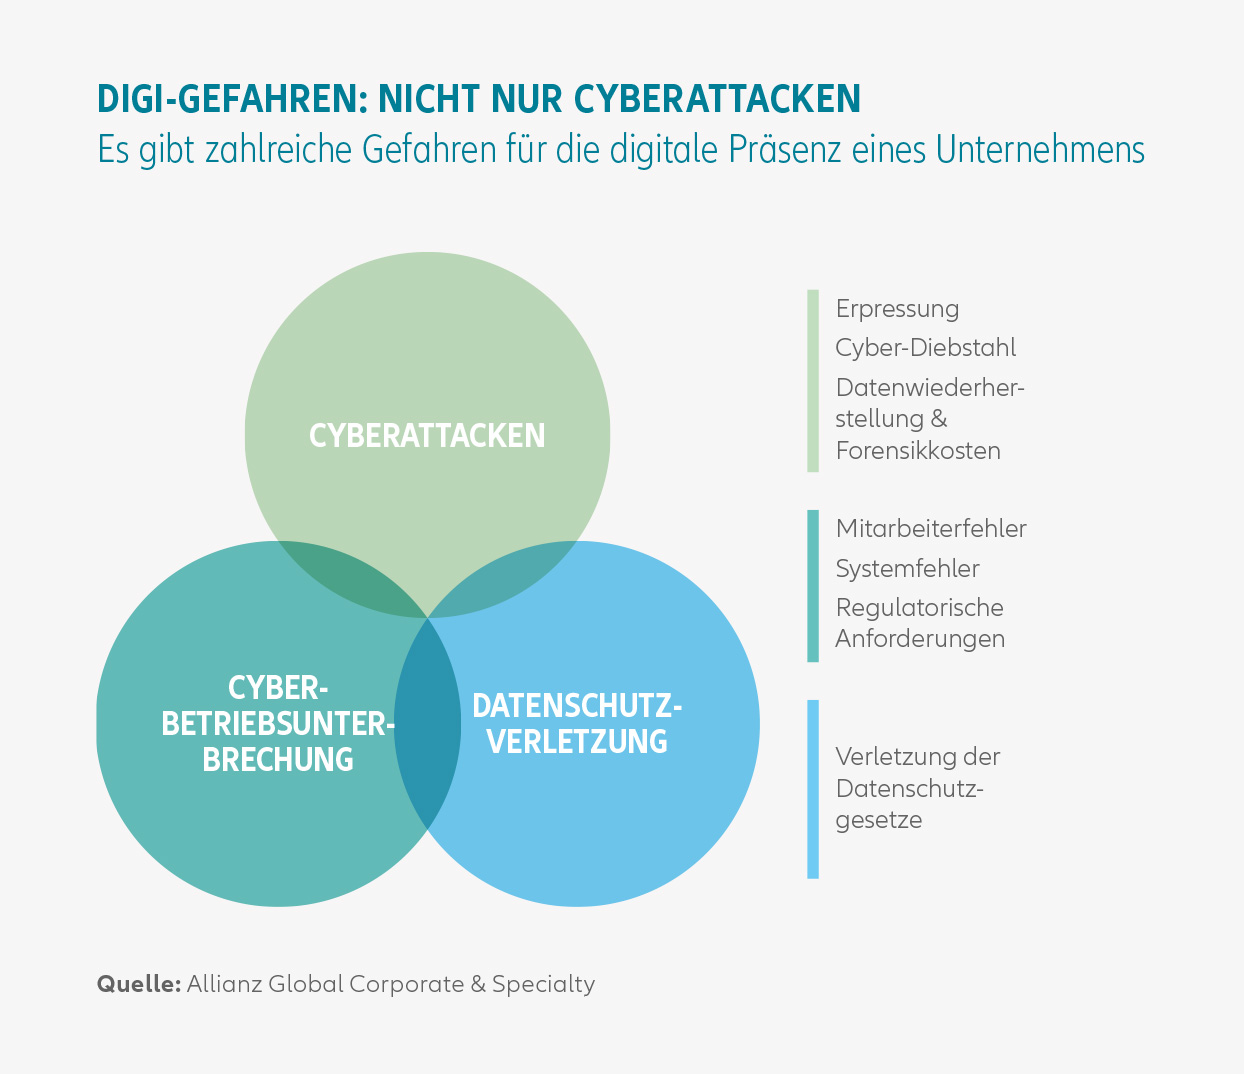 Cyberattacken, Cyber-Betriebsunterbrechung und Datenschutzverletzung als Unternehmens-Risiken